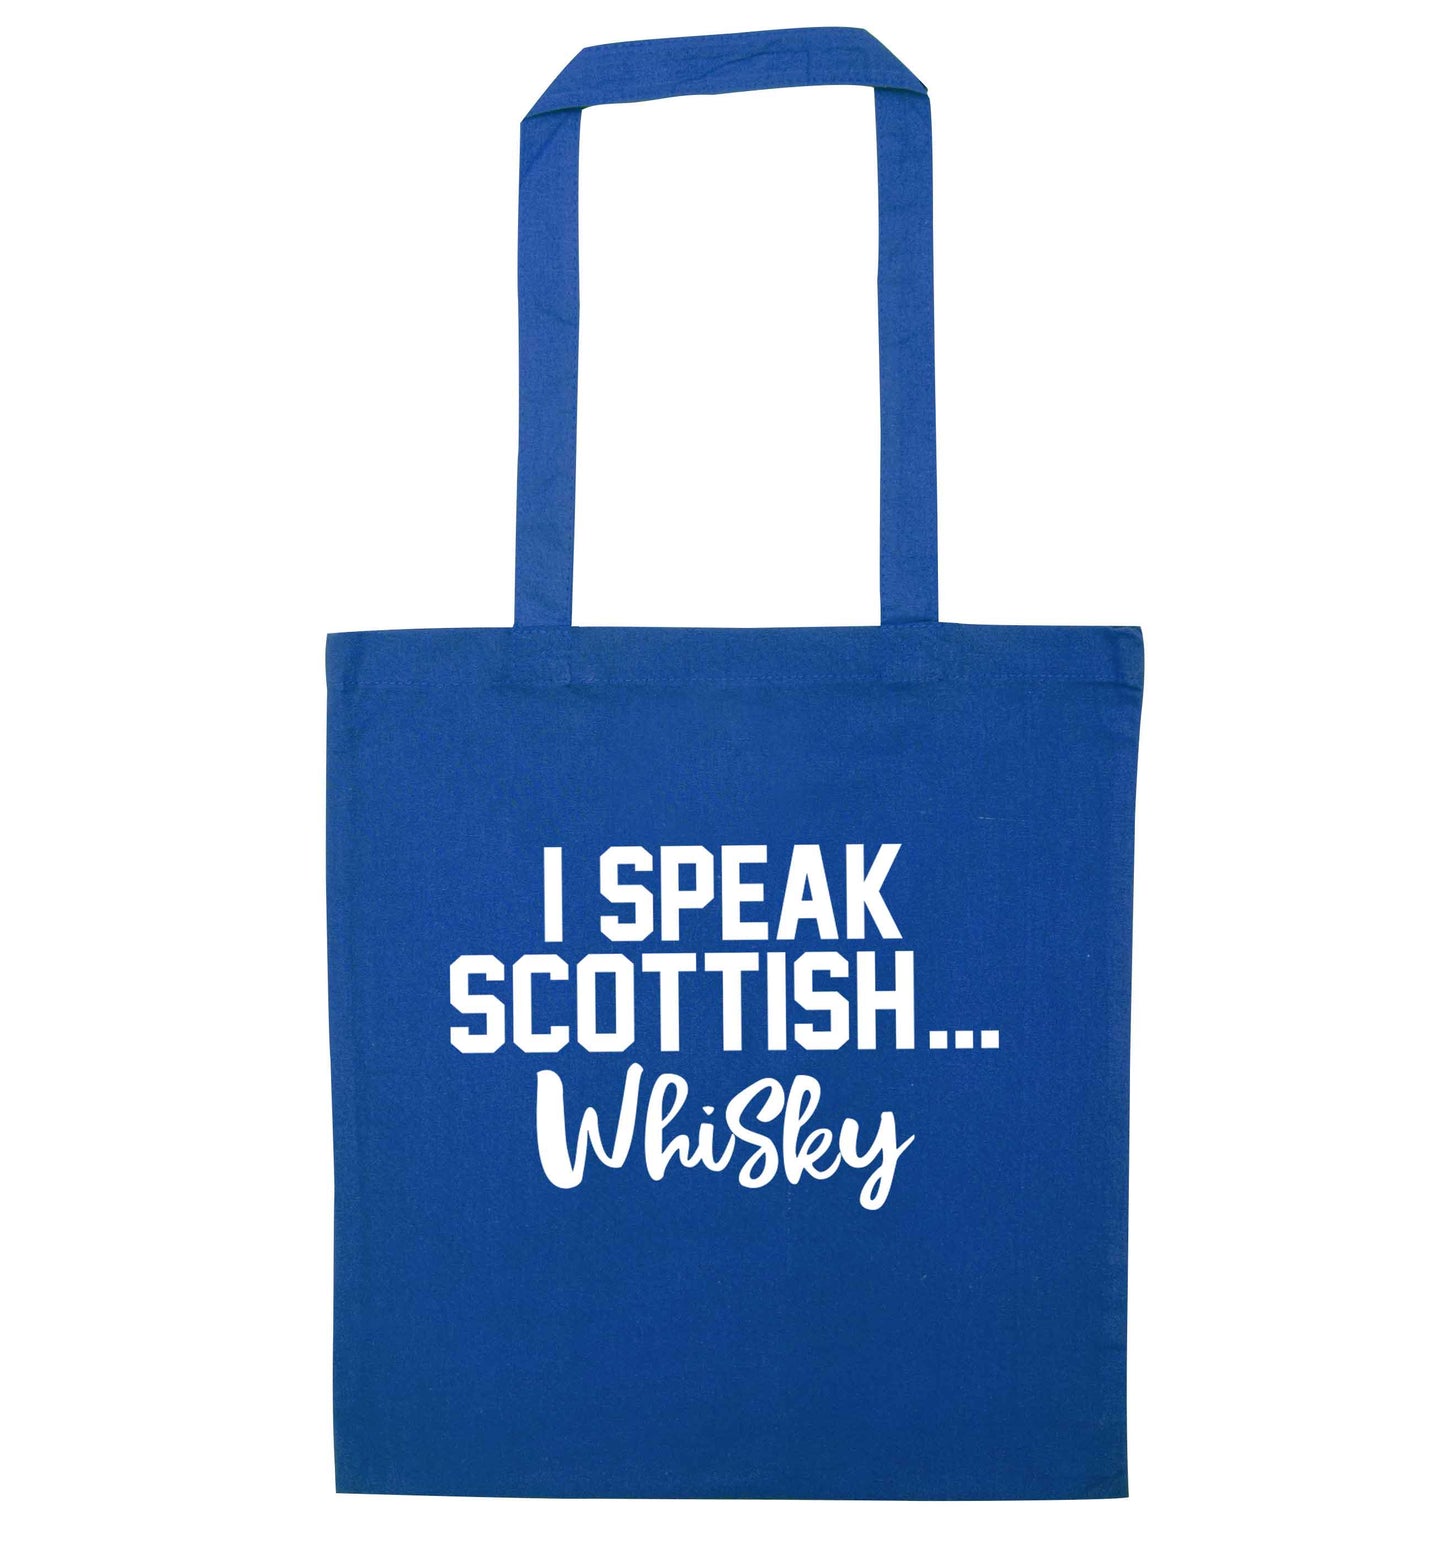 I speak scottish...whisky blue tote bag